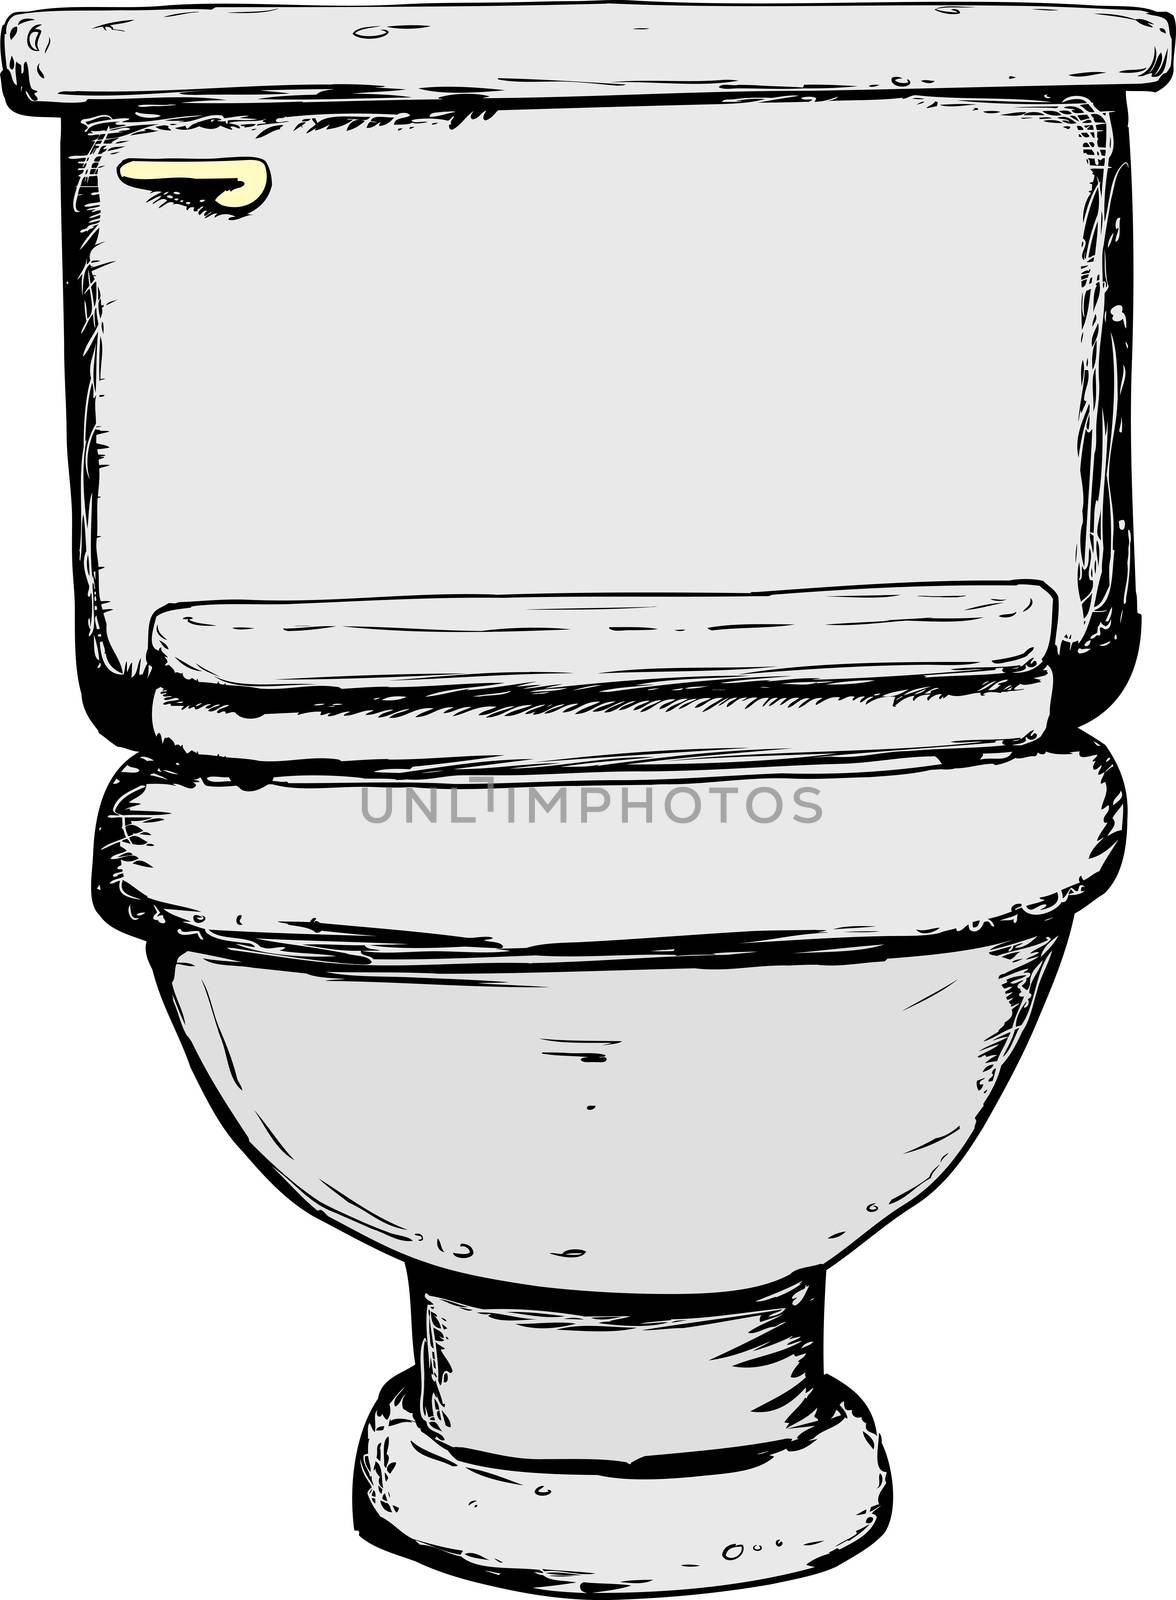 Single closed toilet illustration by TheBlackRhino